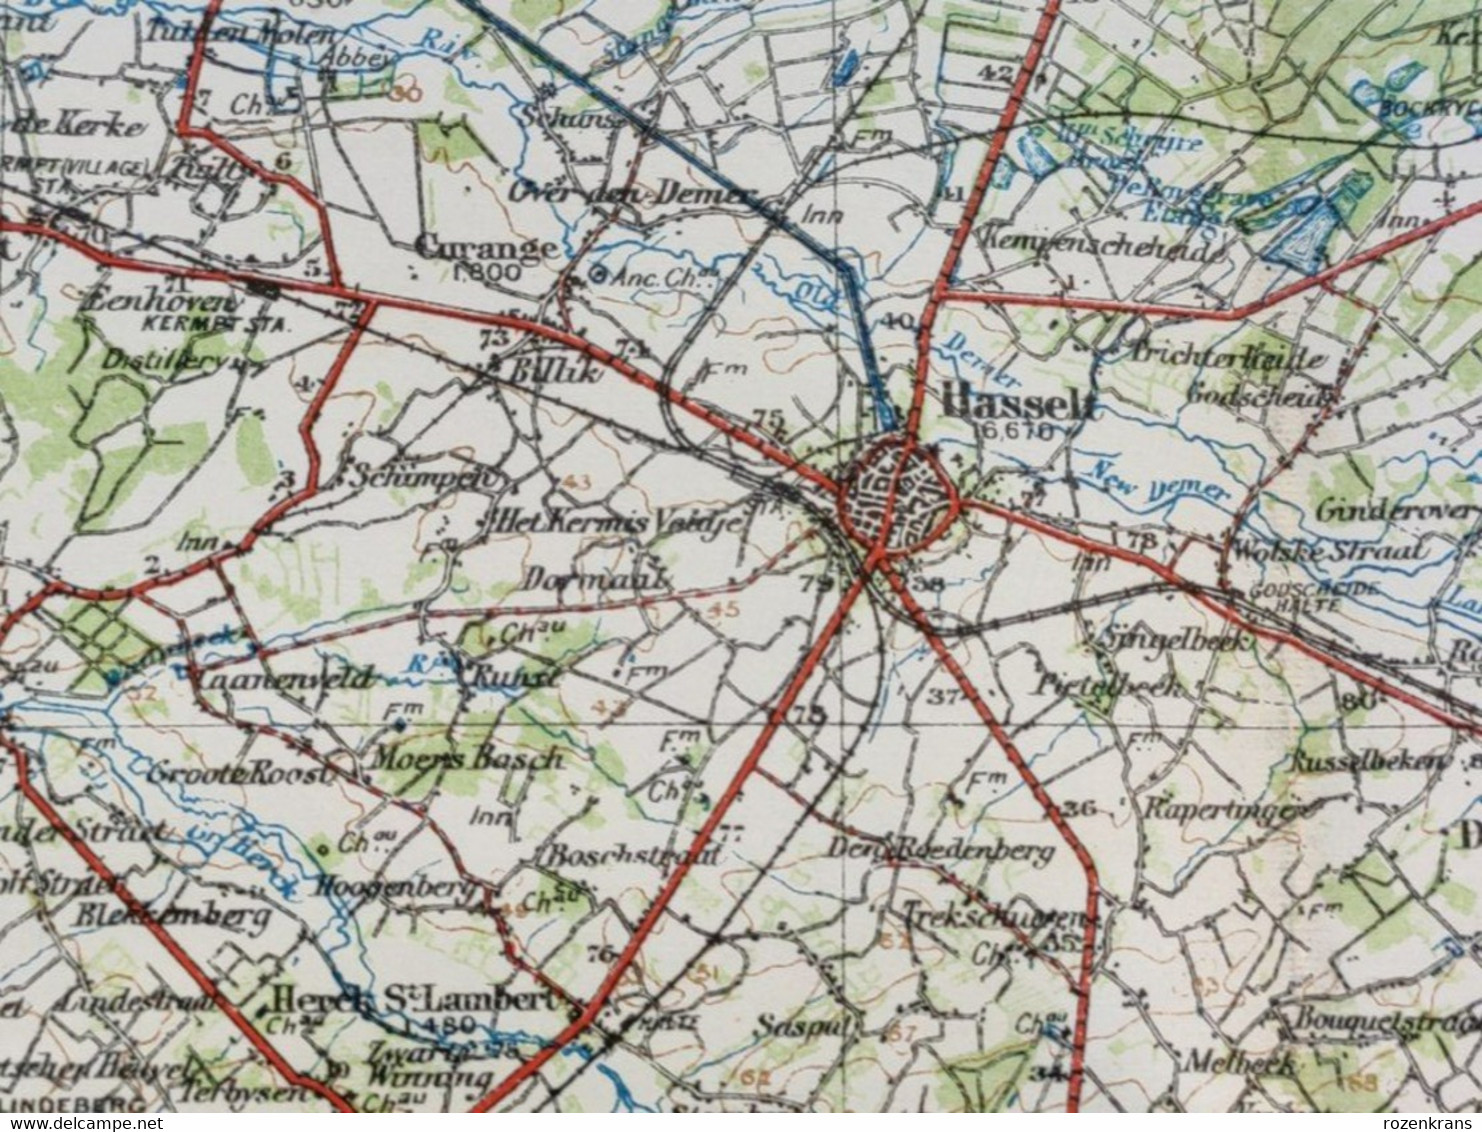 Carte Topographique Militaire UK War Office 1919 World War 1 WW1 Liege Verviers Huy Hasselt Maastricht Tongeren Diest